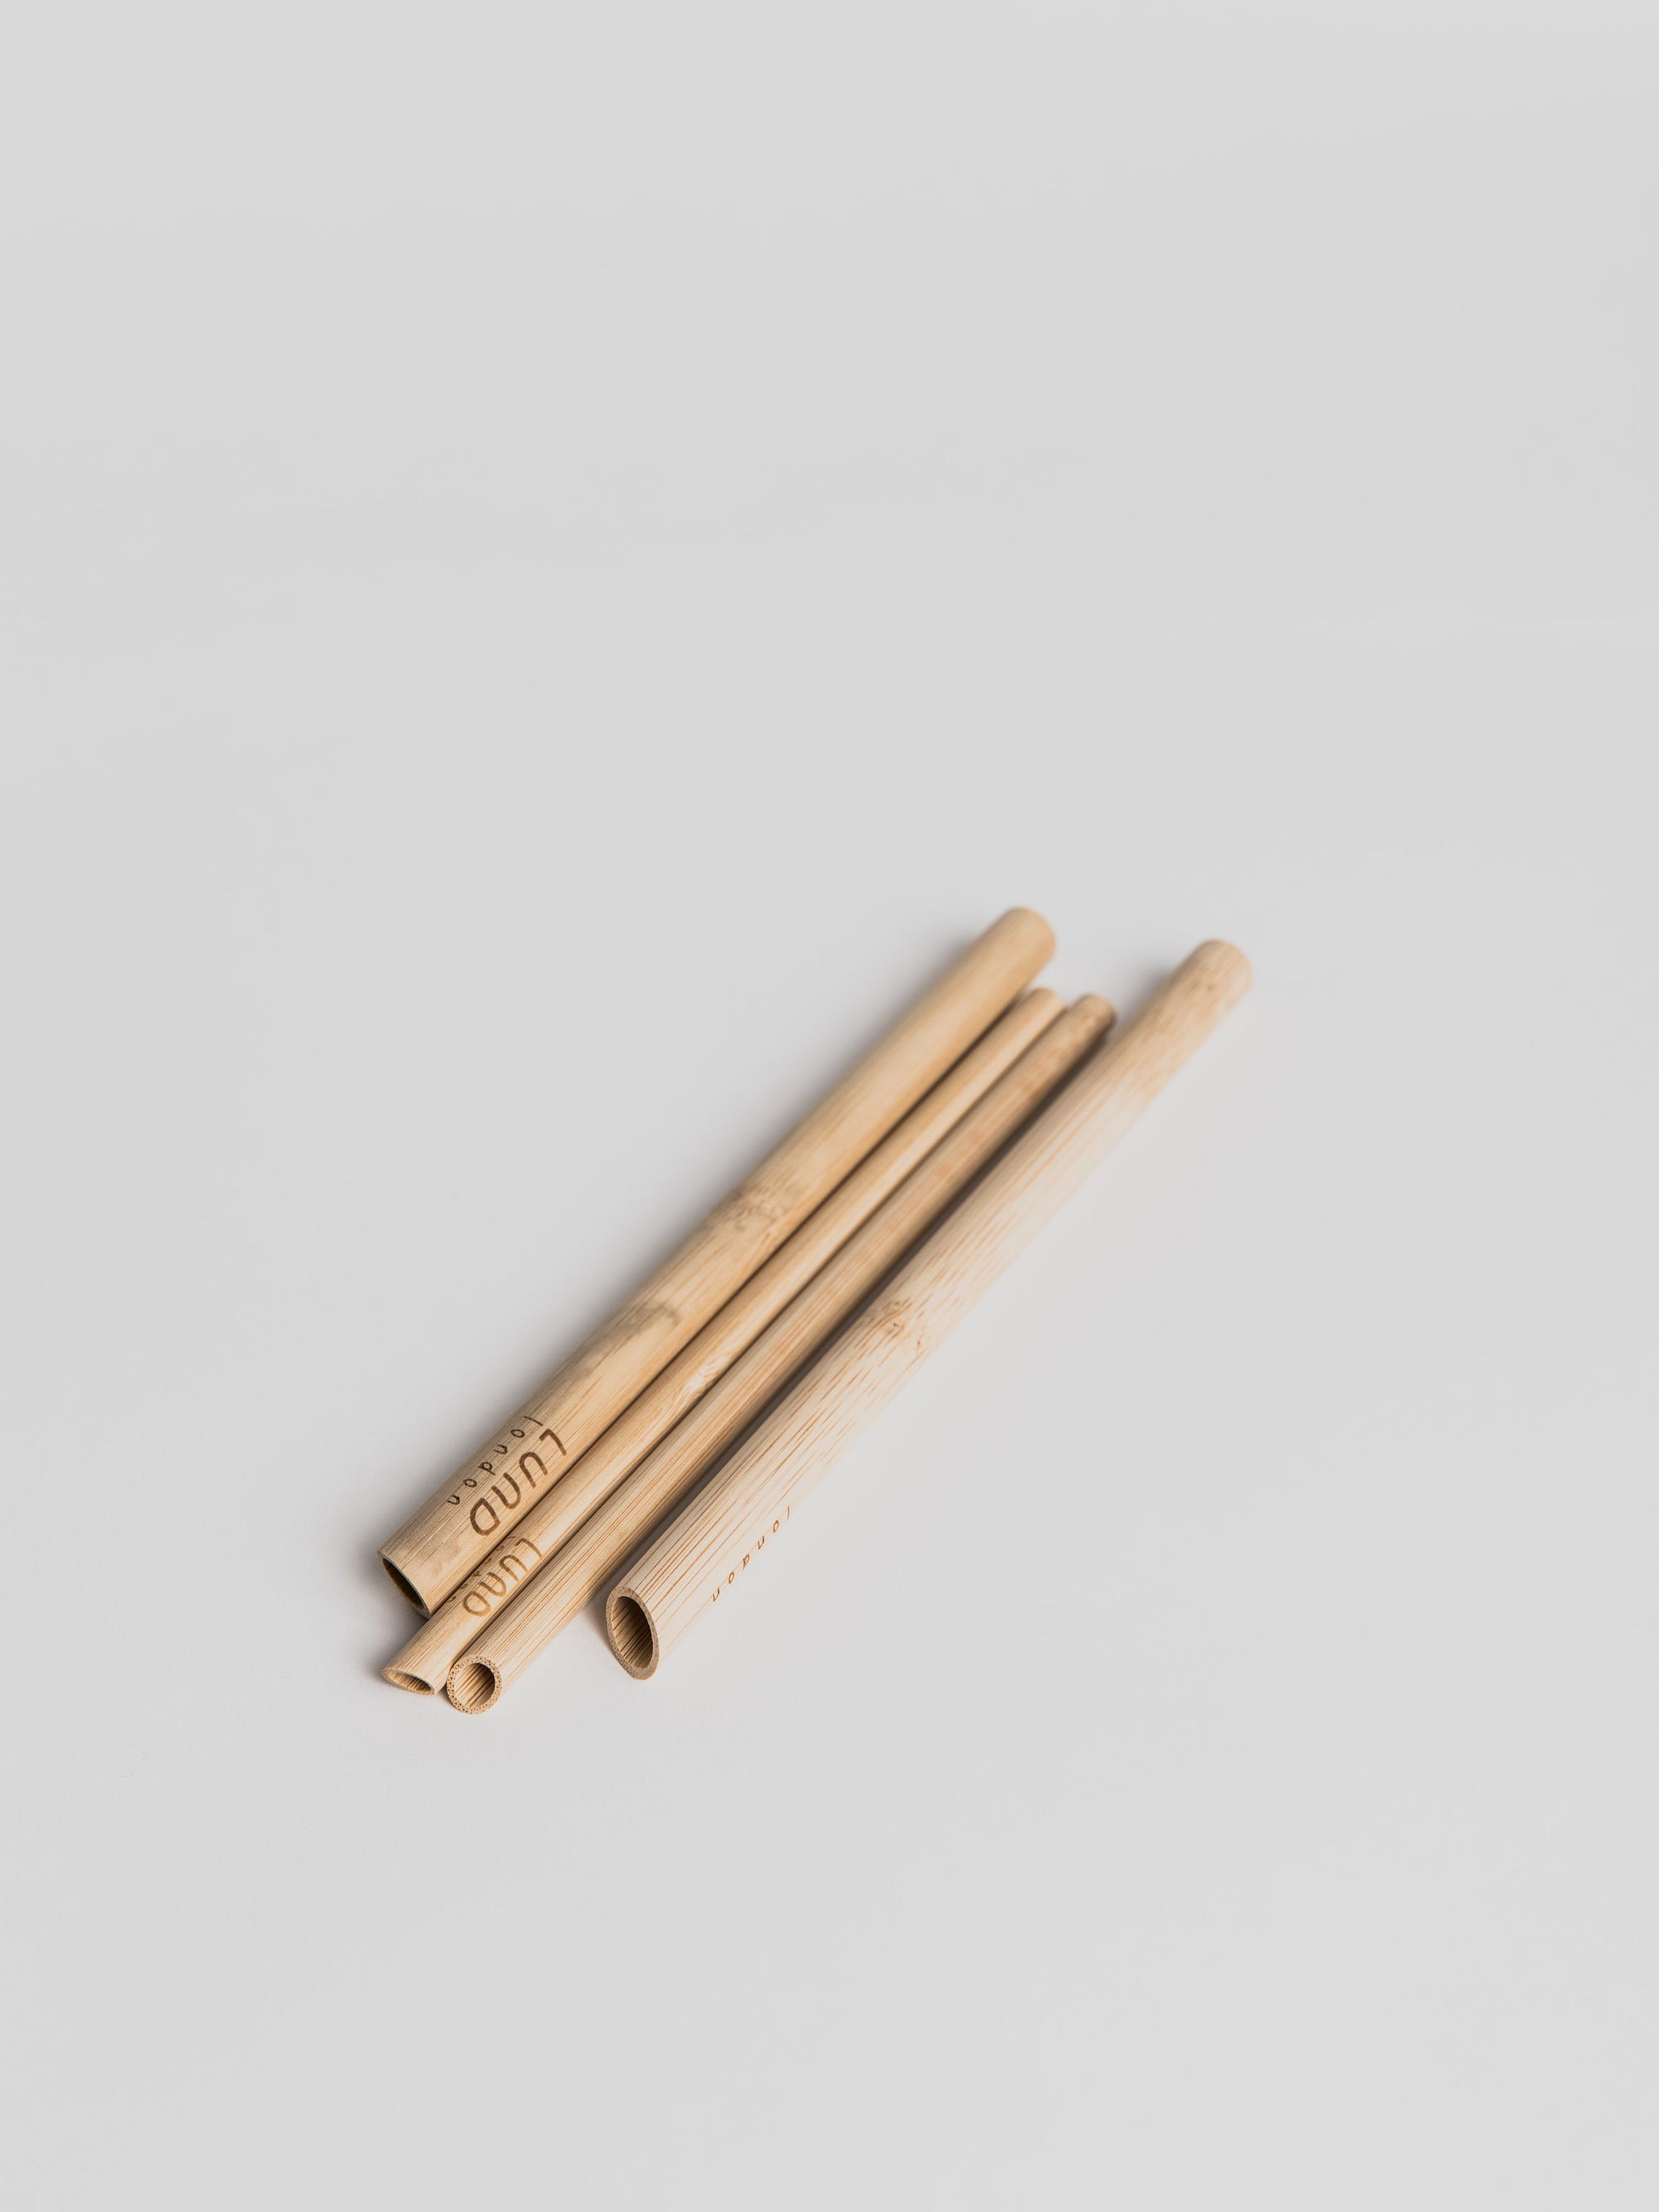 Wooden Straw - Mixed Set of 2 Regular & 2 Thick Straws Straw LUND London 